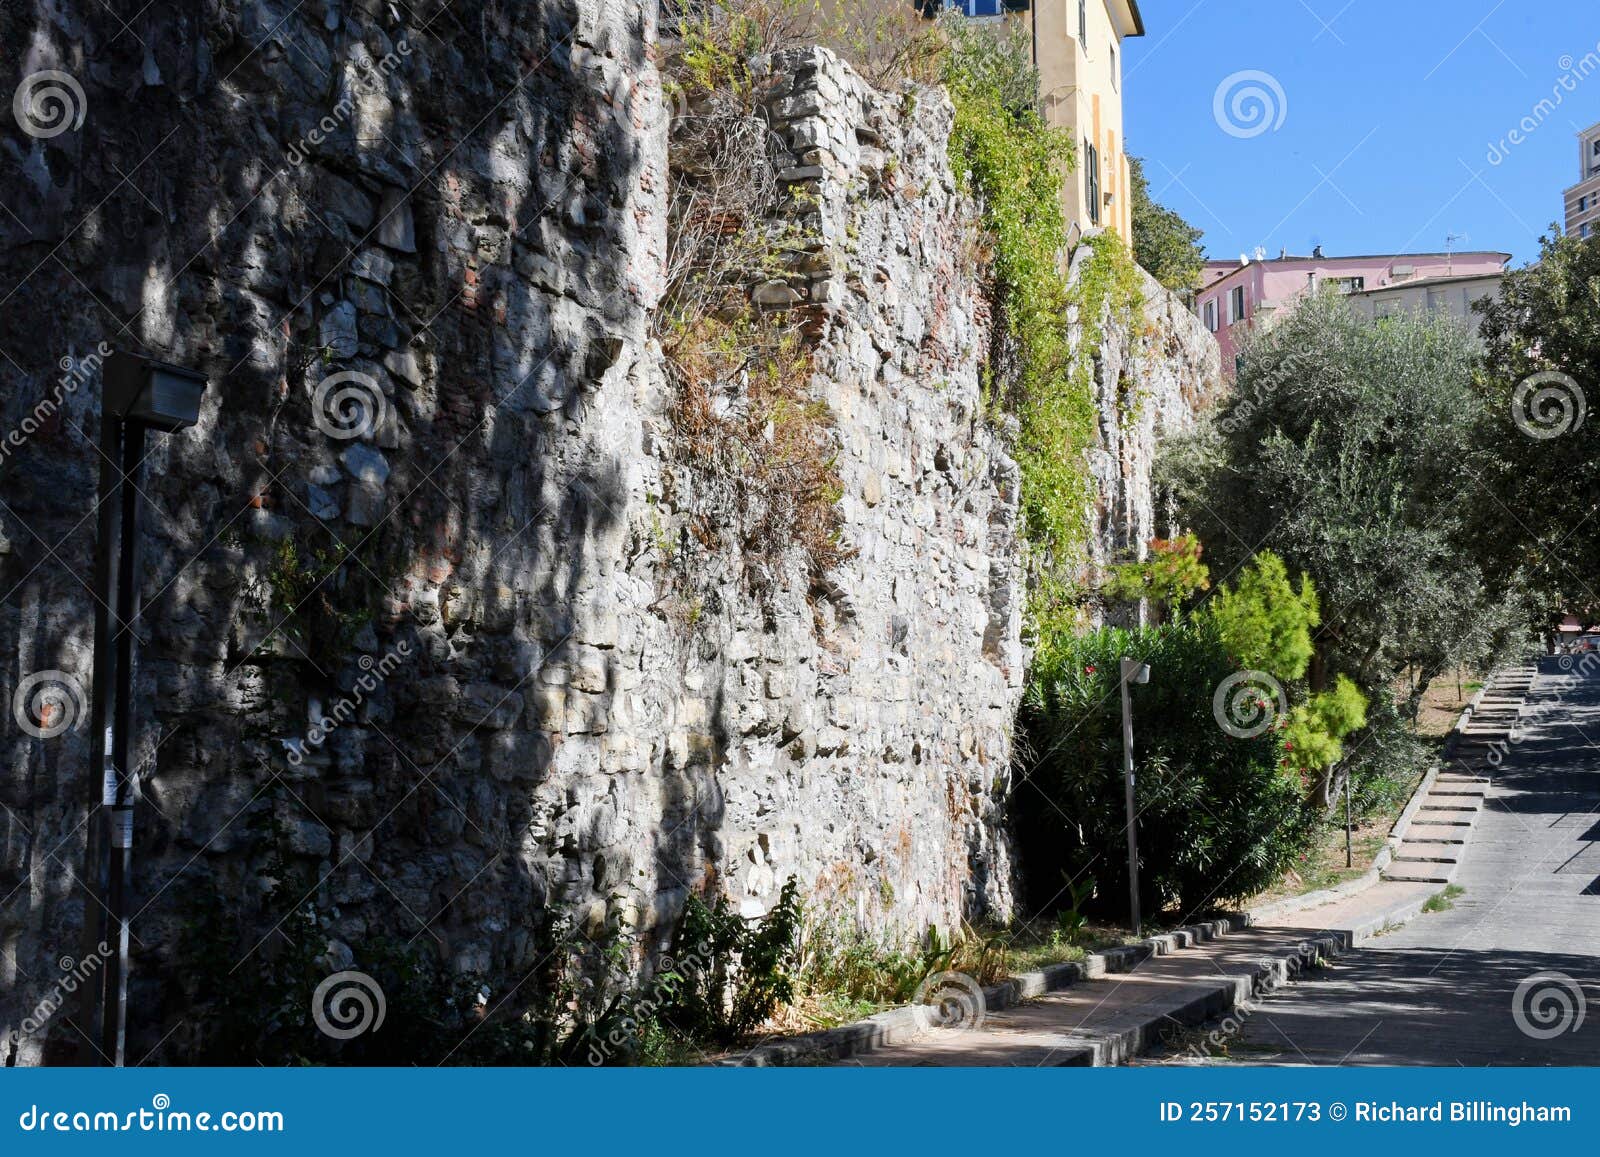 old city wall, mera del barbarossa, via del colle, genoa, italy.